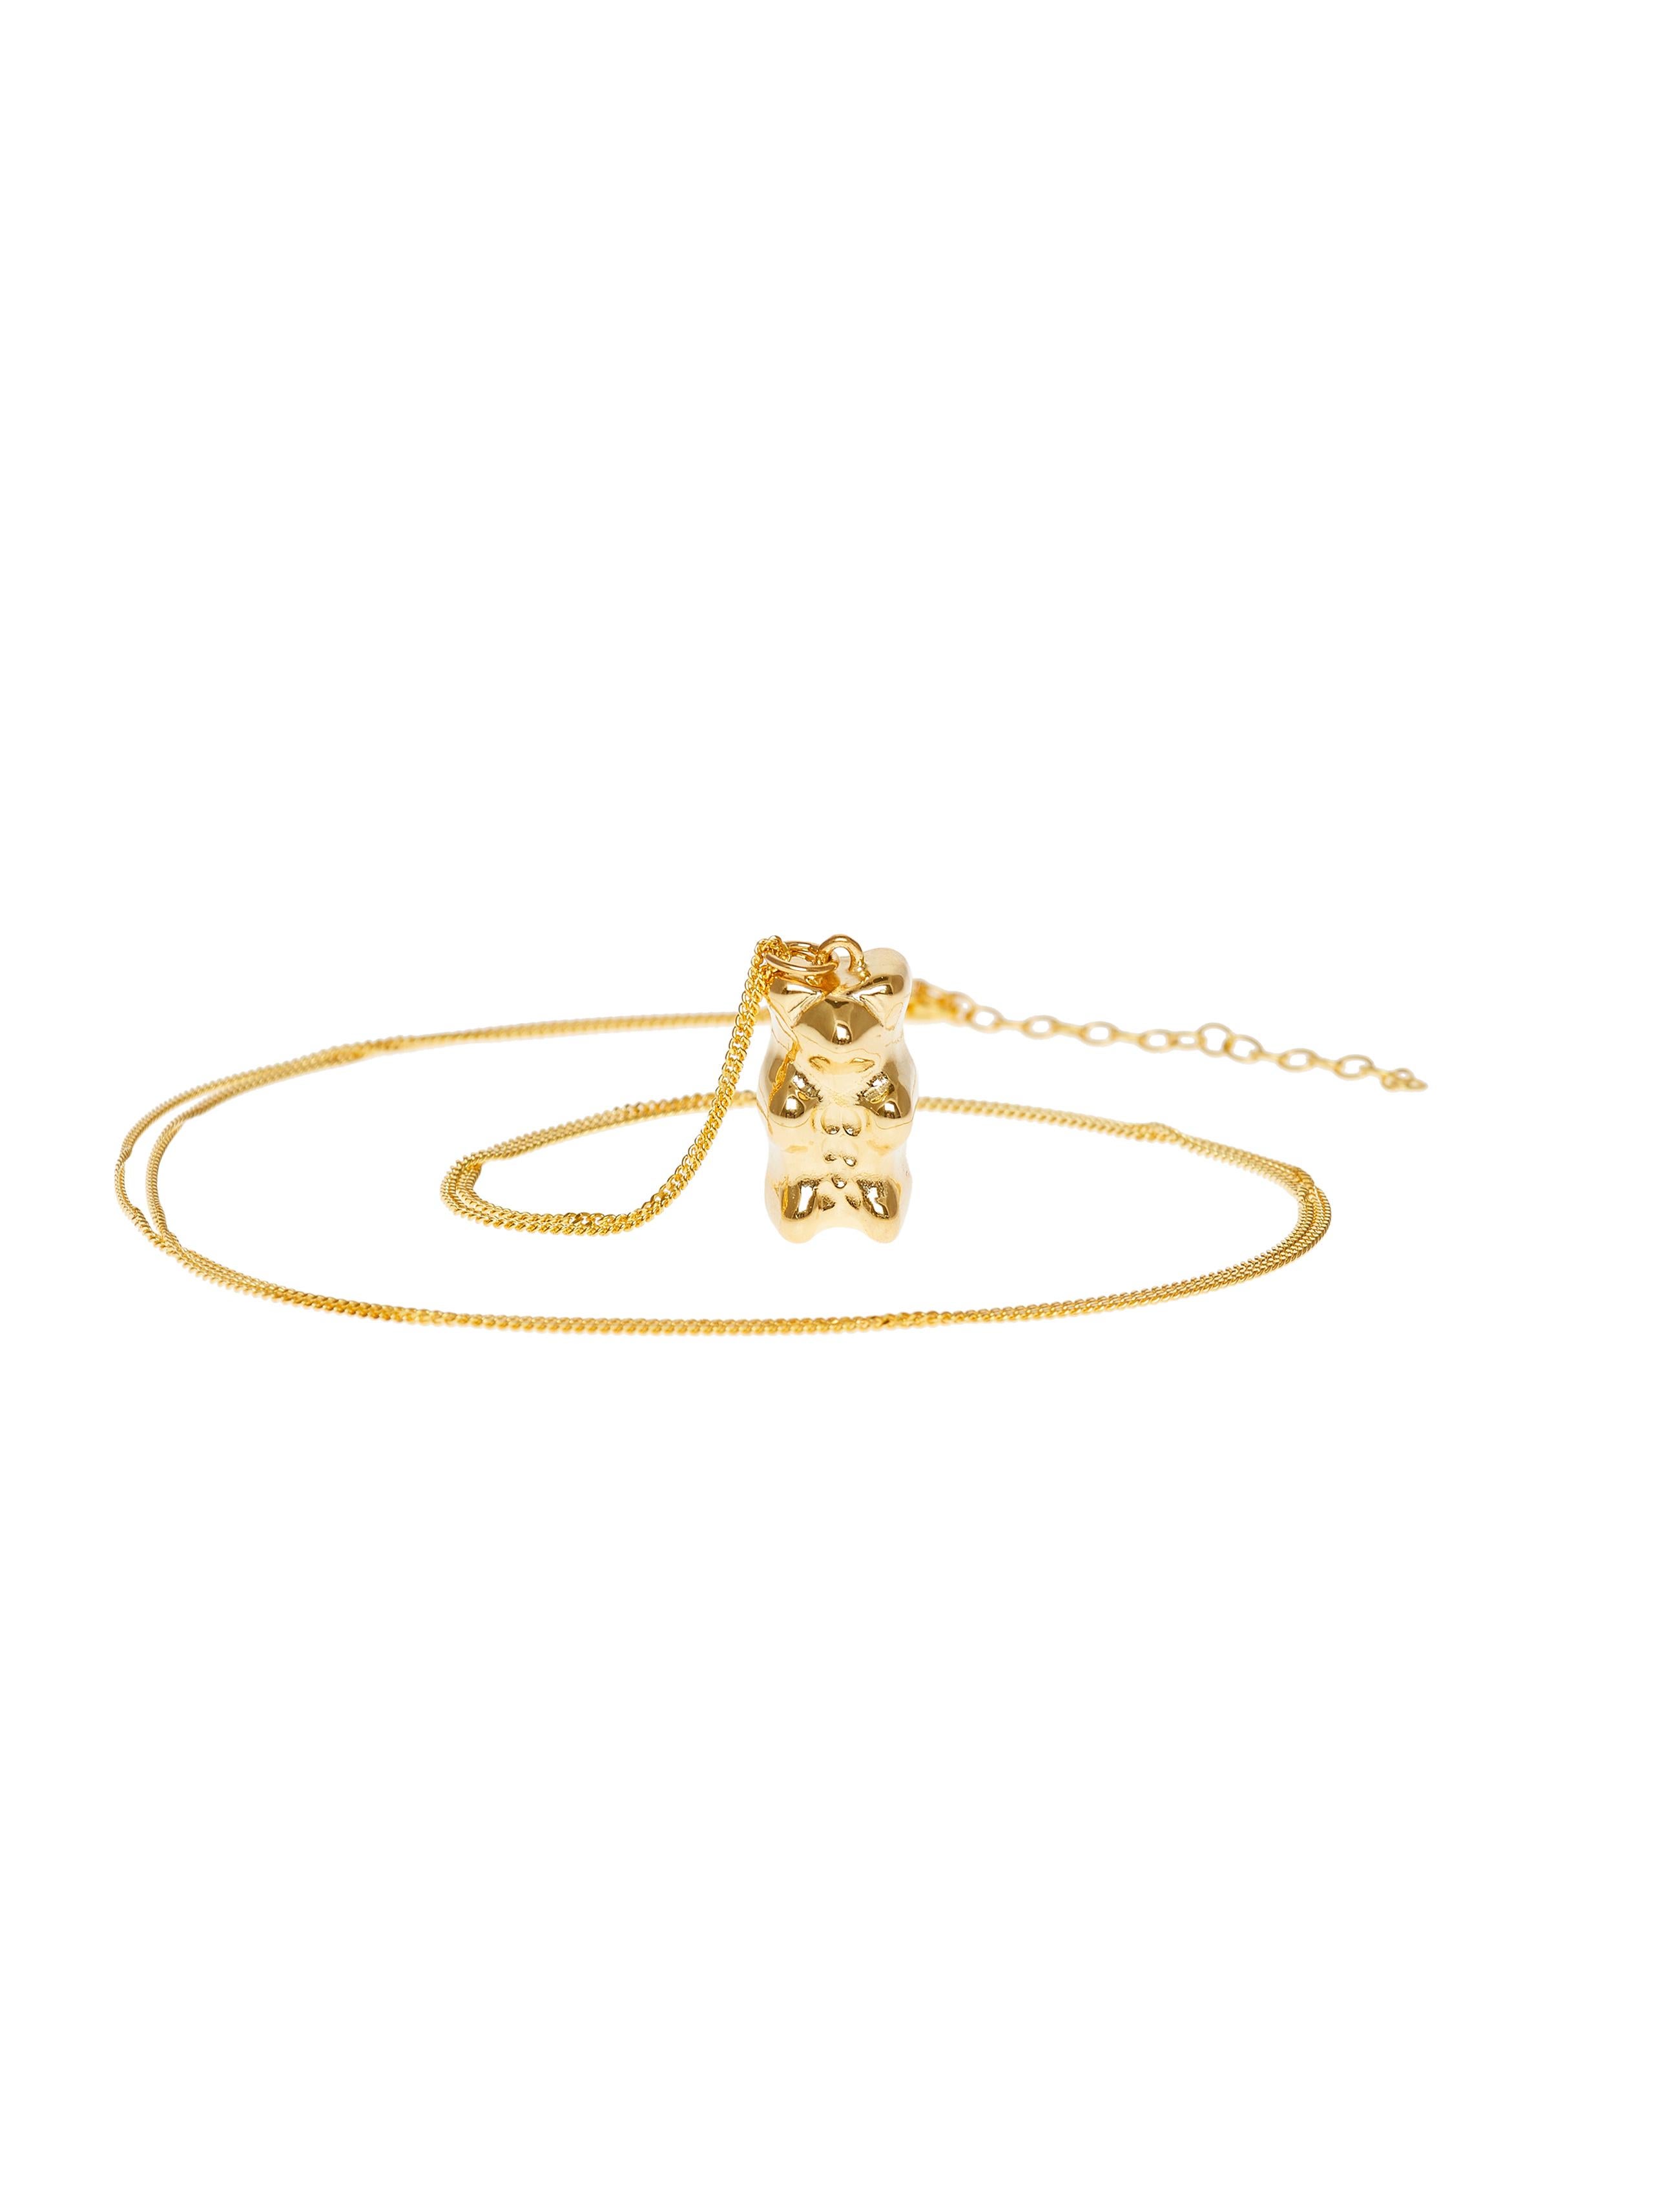 gummy bear necklace gold